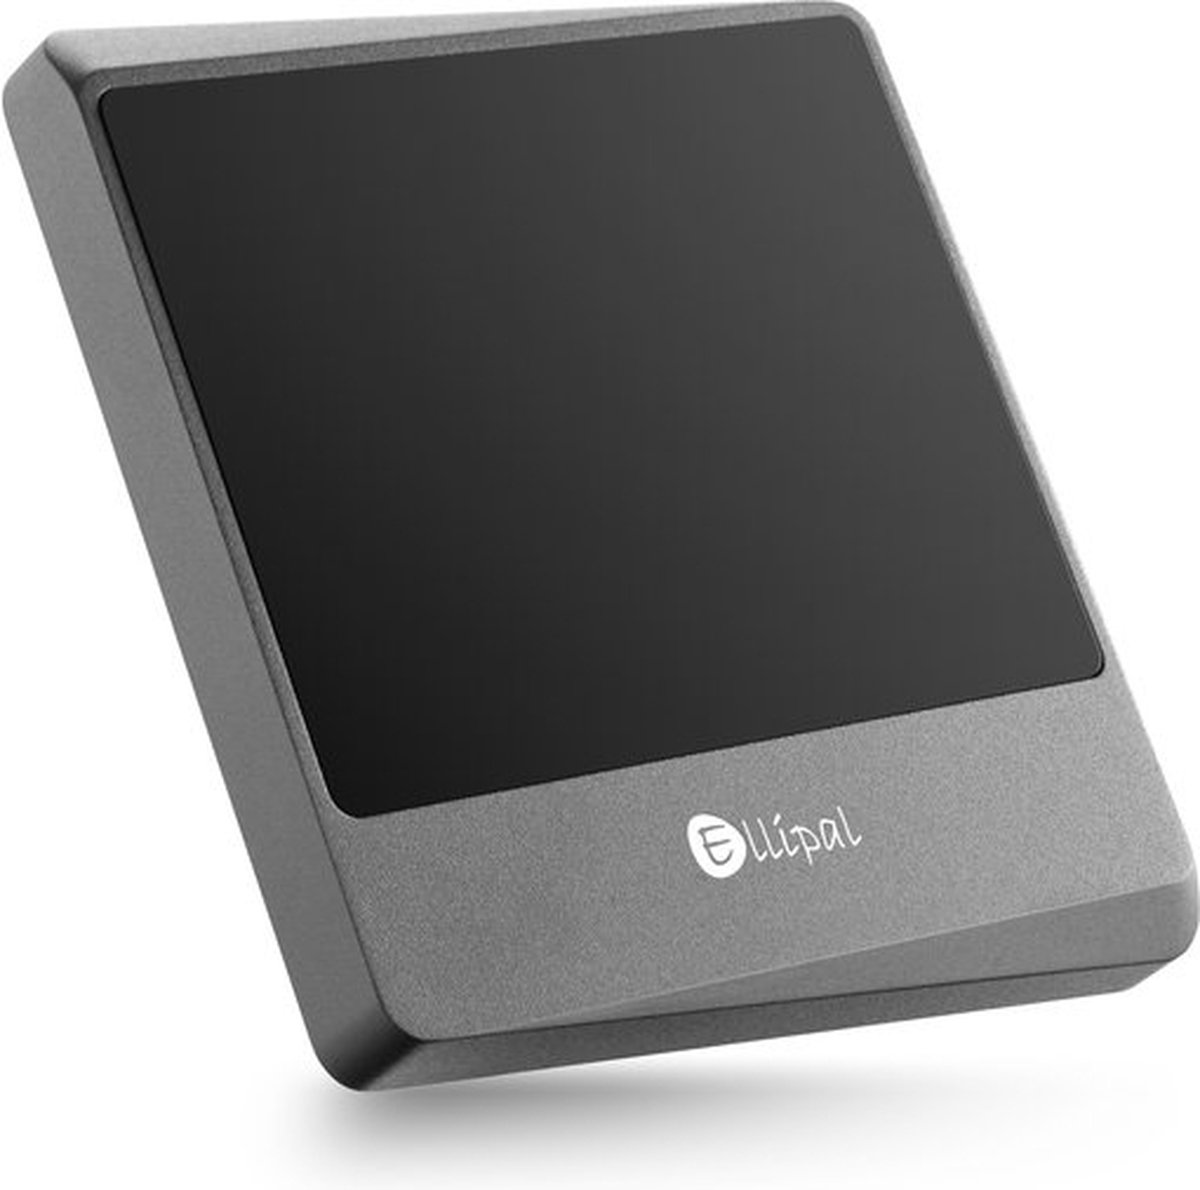 Ellipal Titan Mini - Hardware Wallet - GEEN SD-kaart - Air Gapped - Anti Temper - Wallet voor Bitcoin, Ethereum en vele andere crypto - Grey - Ellipal